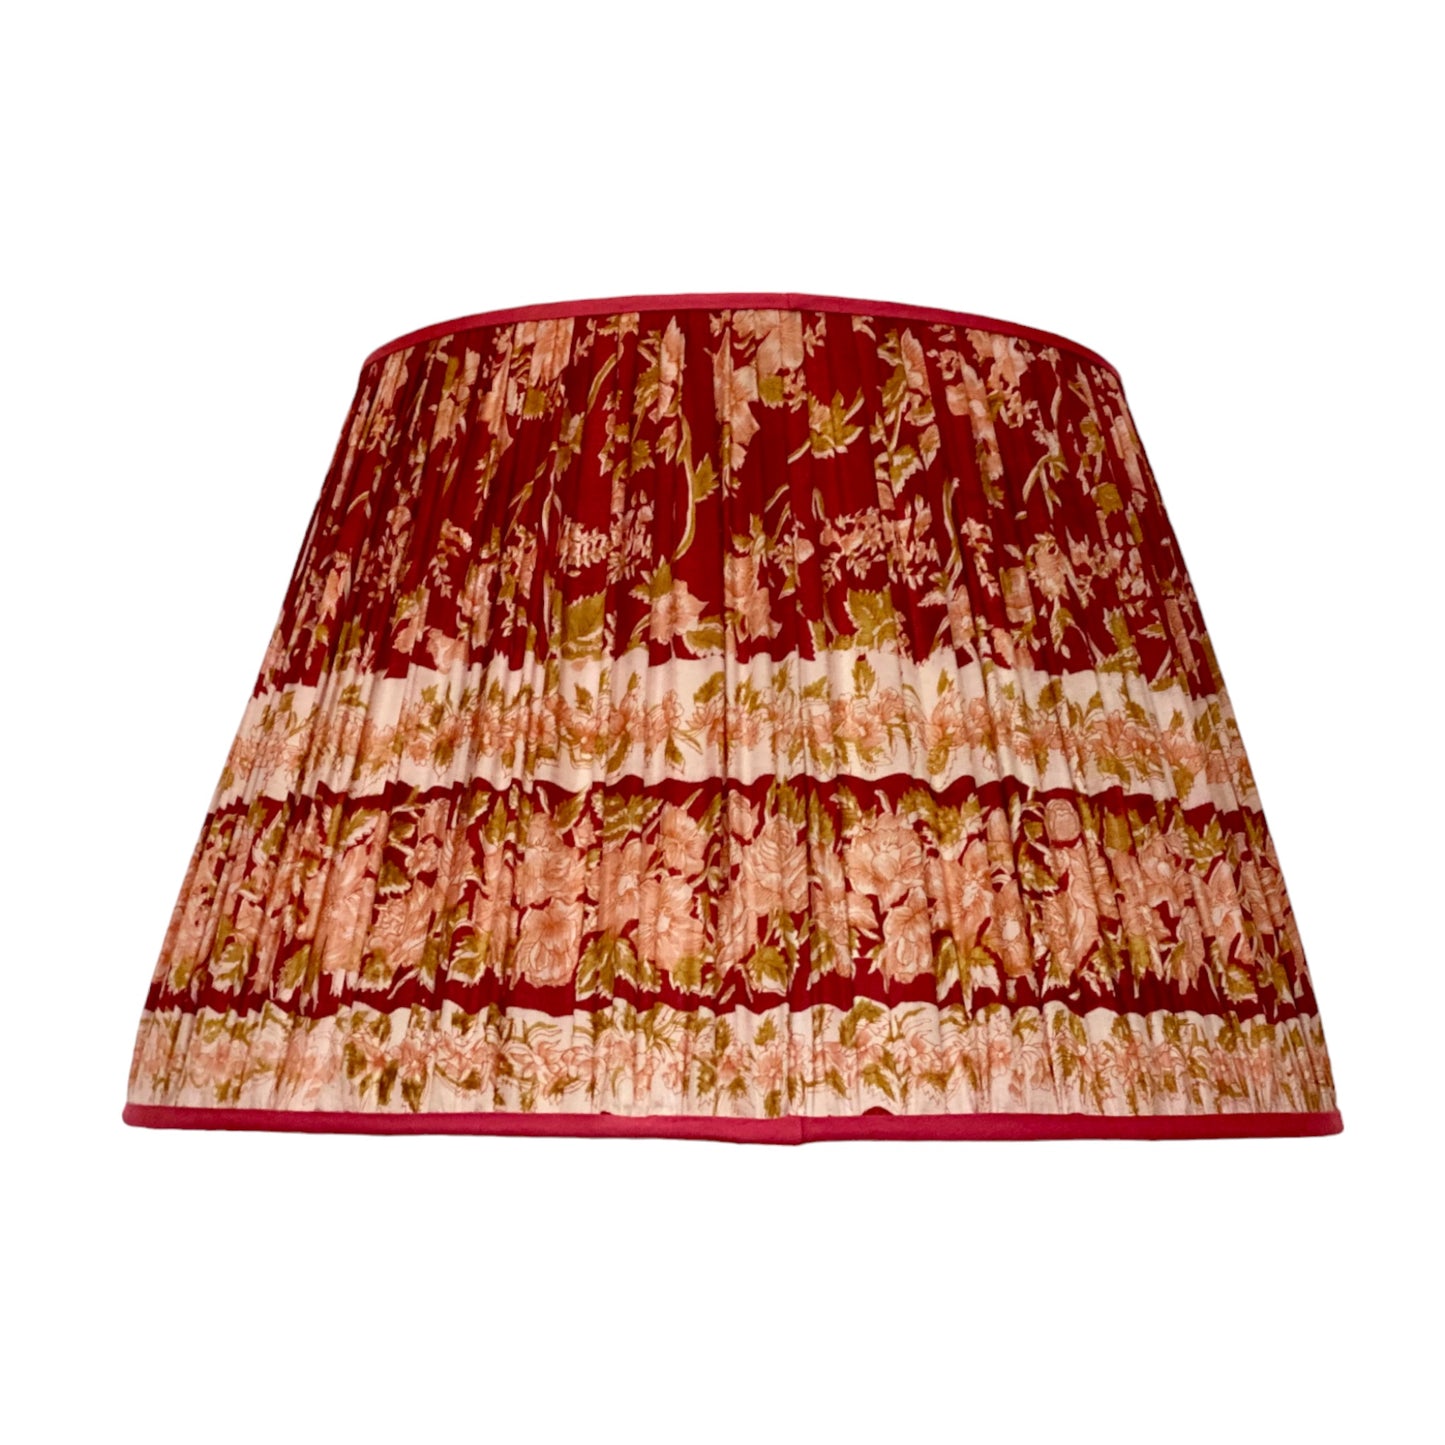 Raspberry chartreuse silk sari vintage lampshade